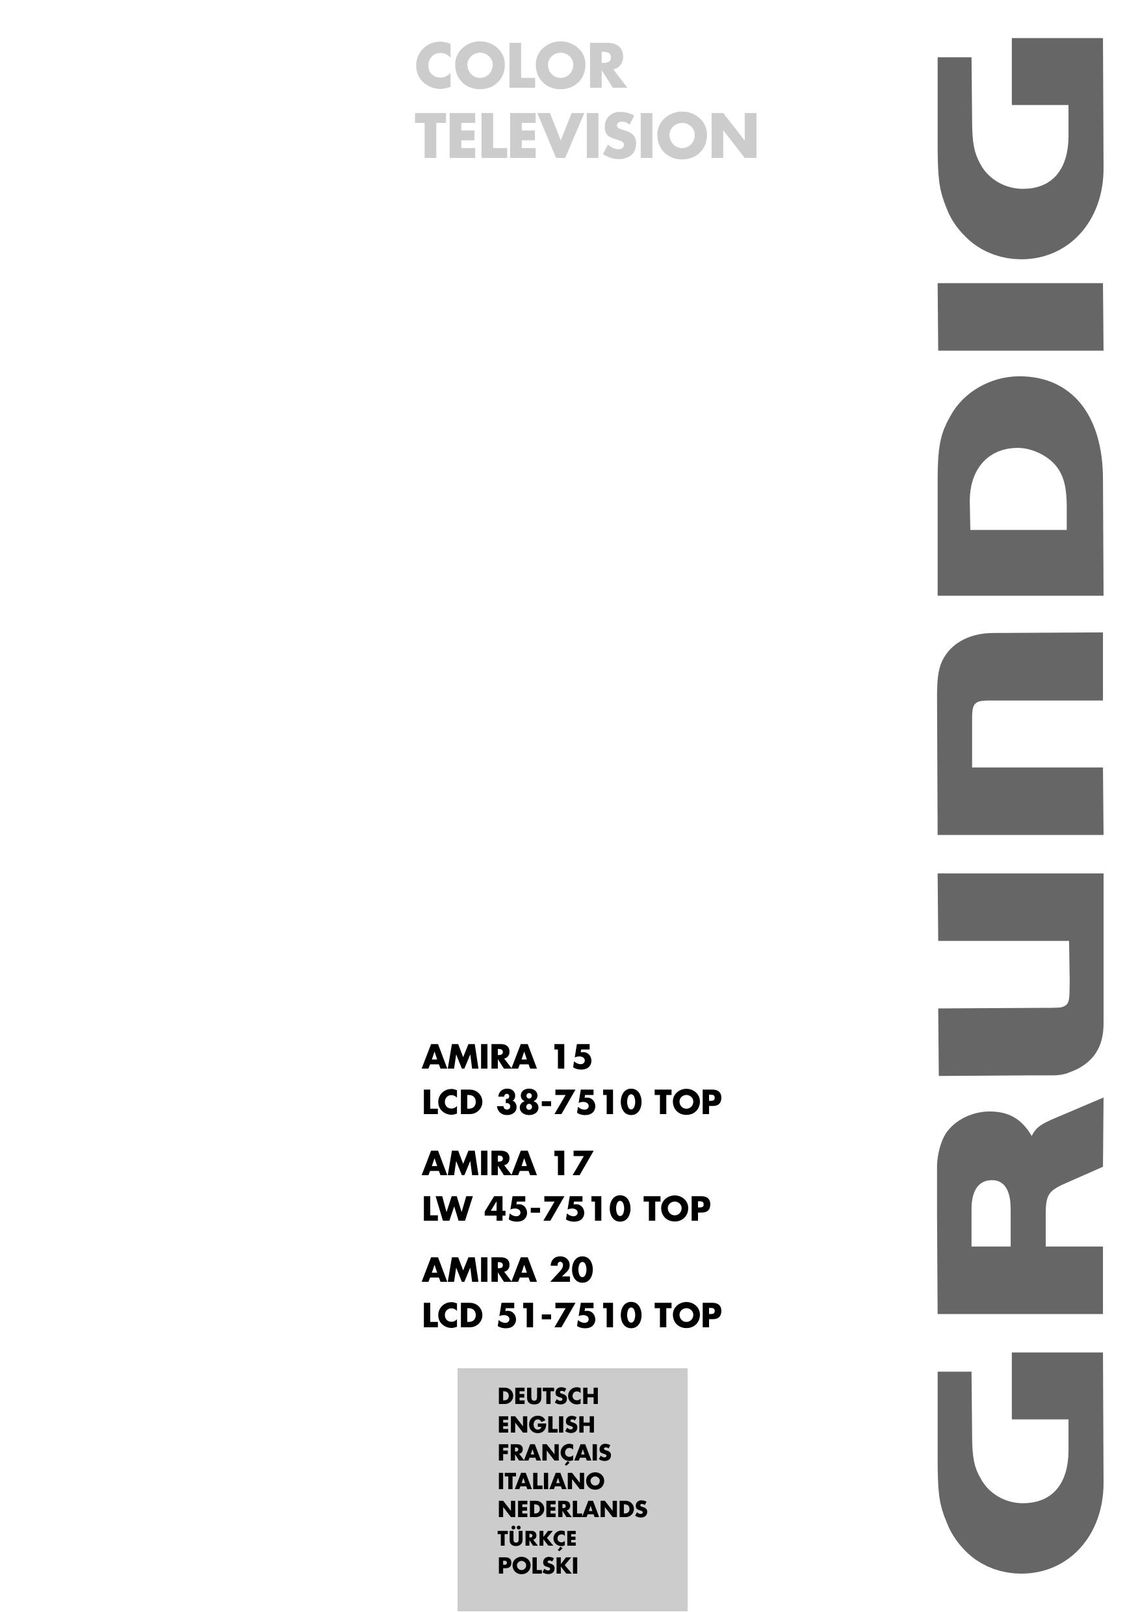 Grundig AMIRA 20 LCD 51-7510 TOP CRT Television User Manual